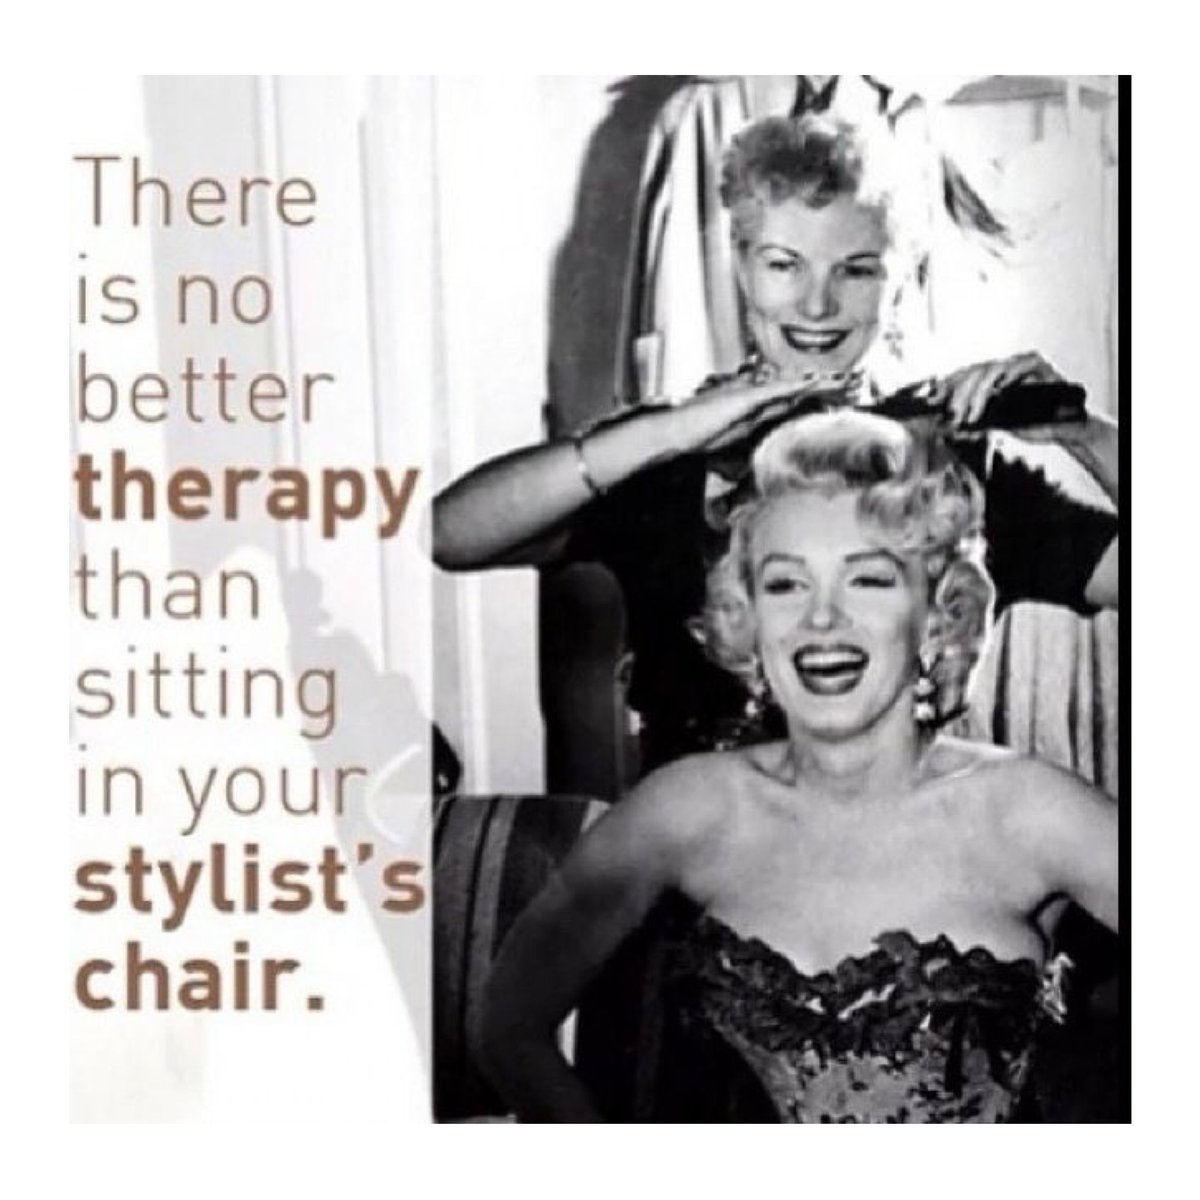 Happy Hairstylist Appreciation Day! ☺️🎉✂️💇🏼💇🏻‍♂️
#HairstylistAppreciationDay #hairstylistappreciation #burnabysalon #theheights #yvr